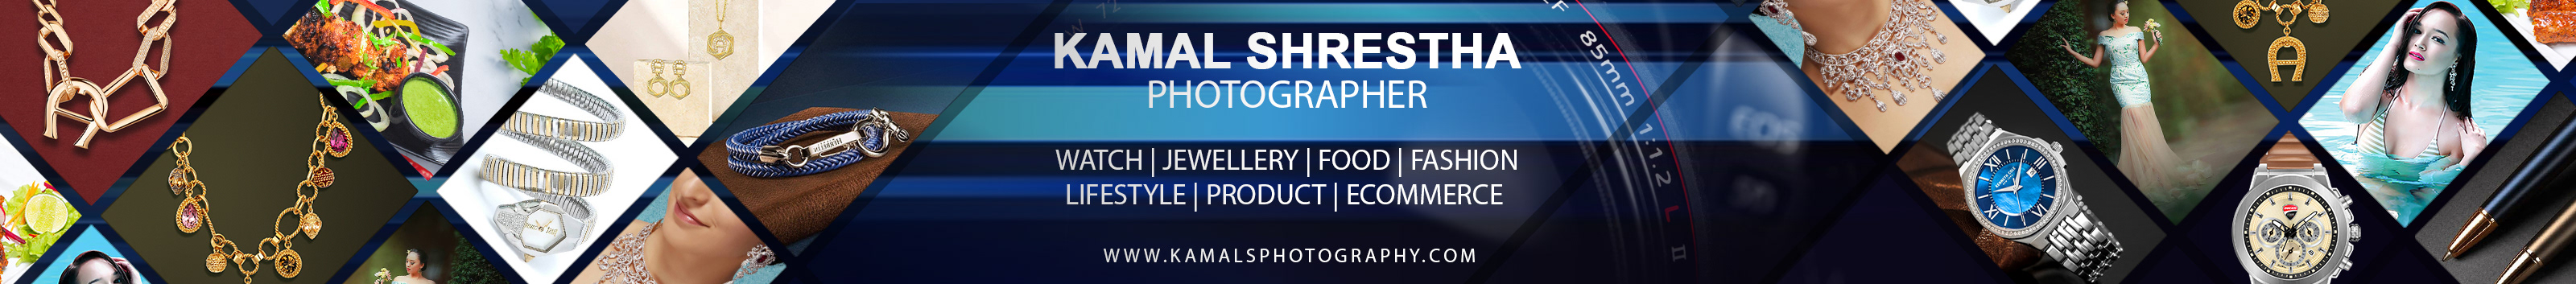 Kamal Shrestha's profile banner